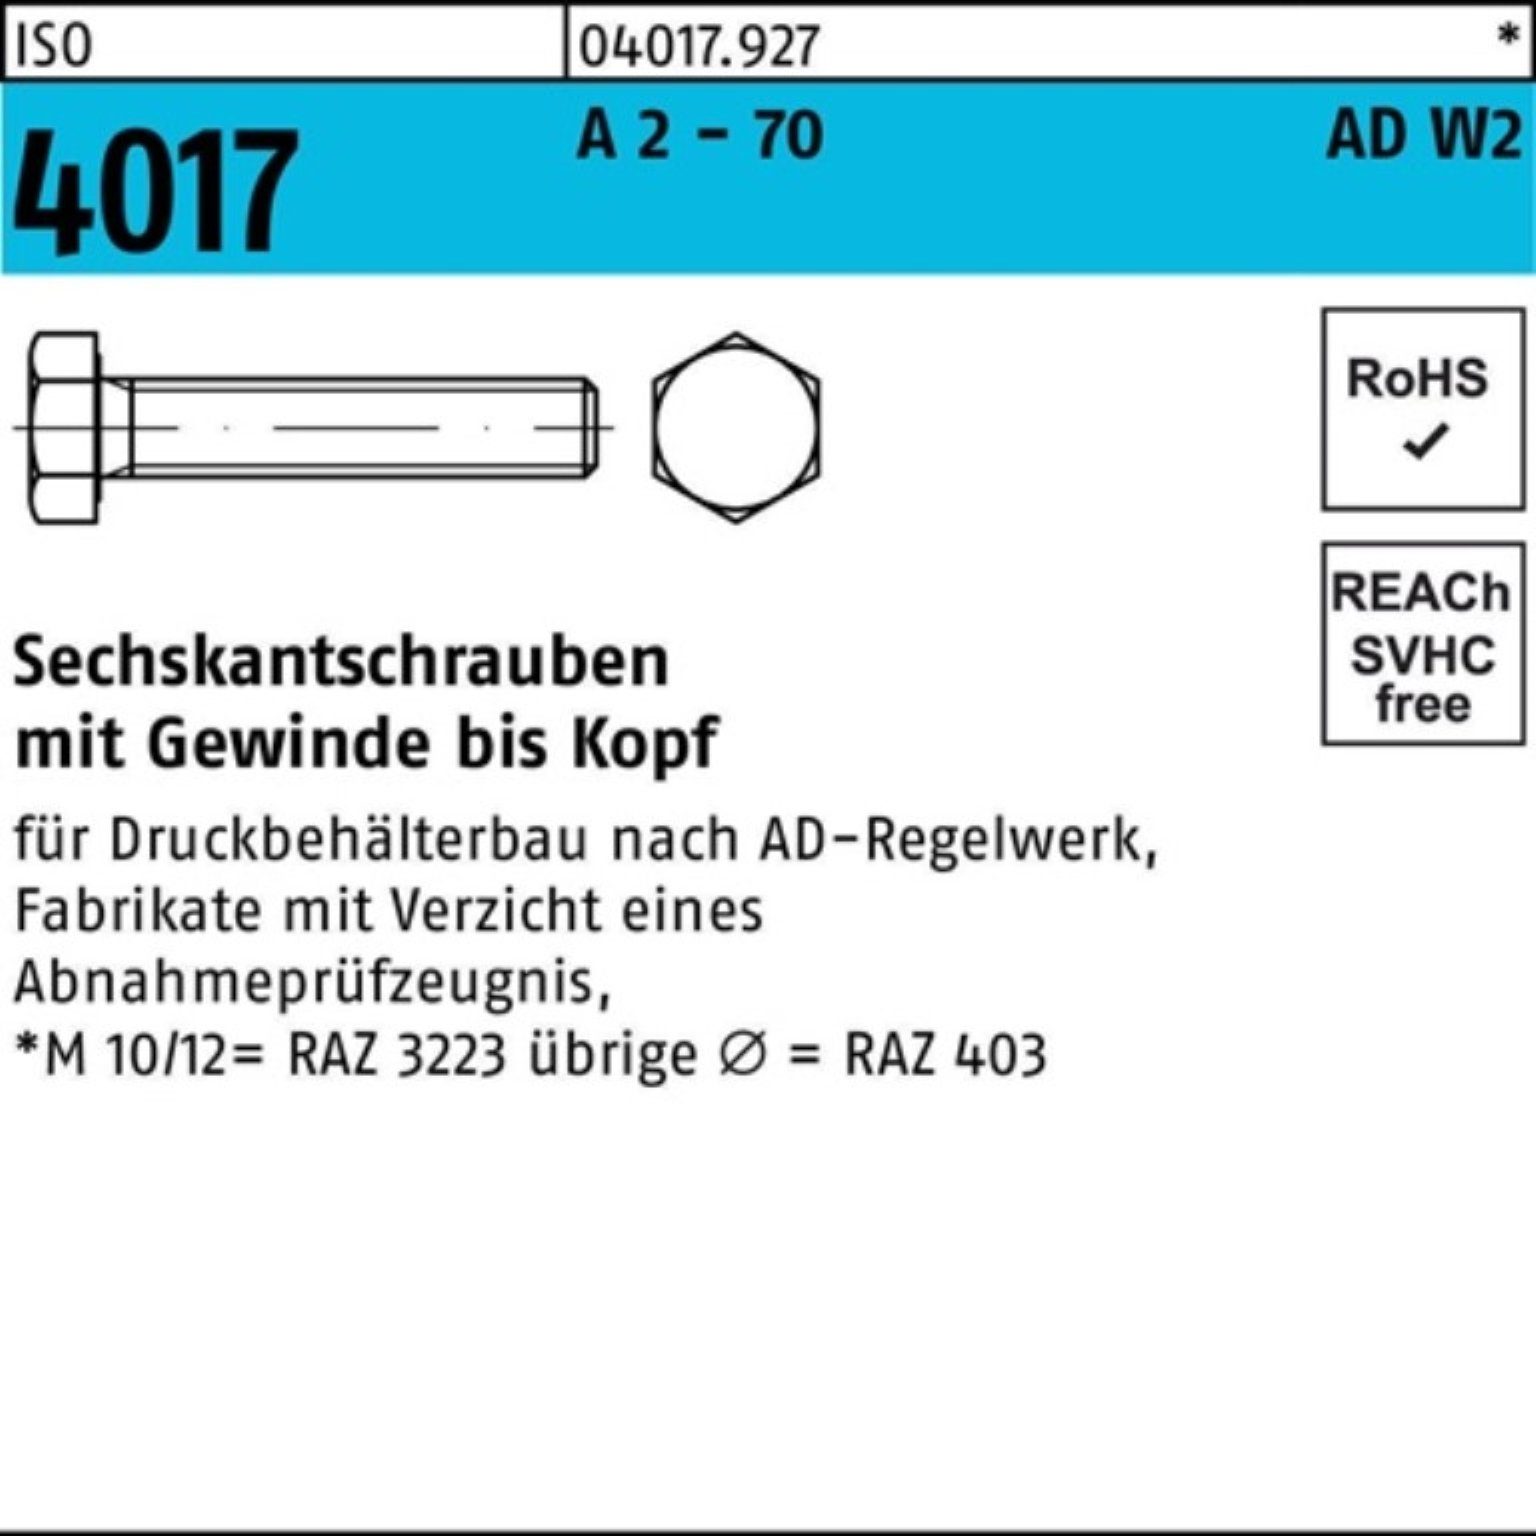 Bufab Sechskantschraube 100er A 20 VG 100 Pack - 70 M10x St AD-W2 ISO Sechskantschraube 2 4017